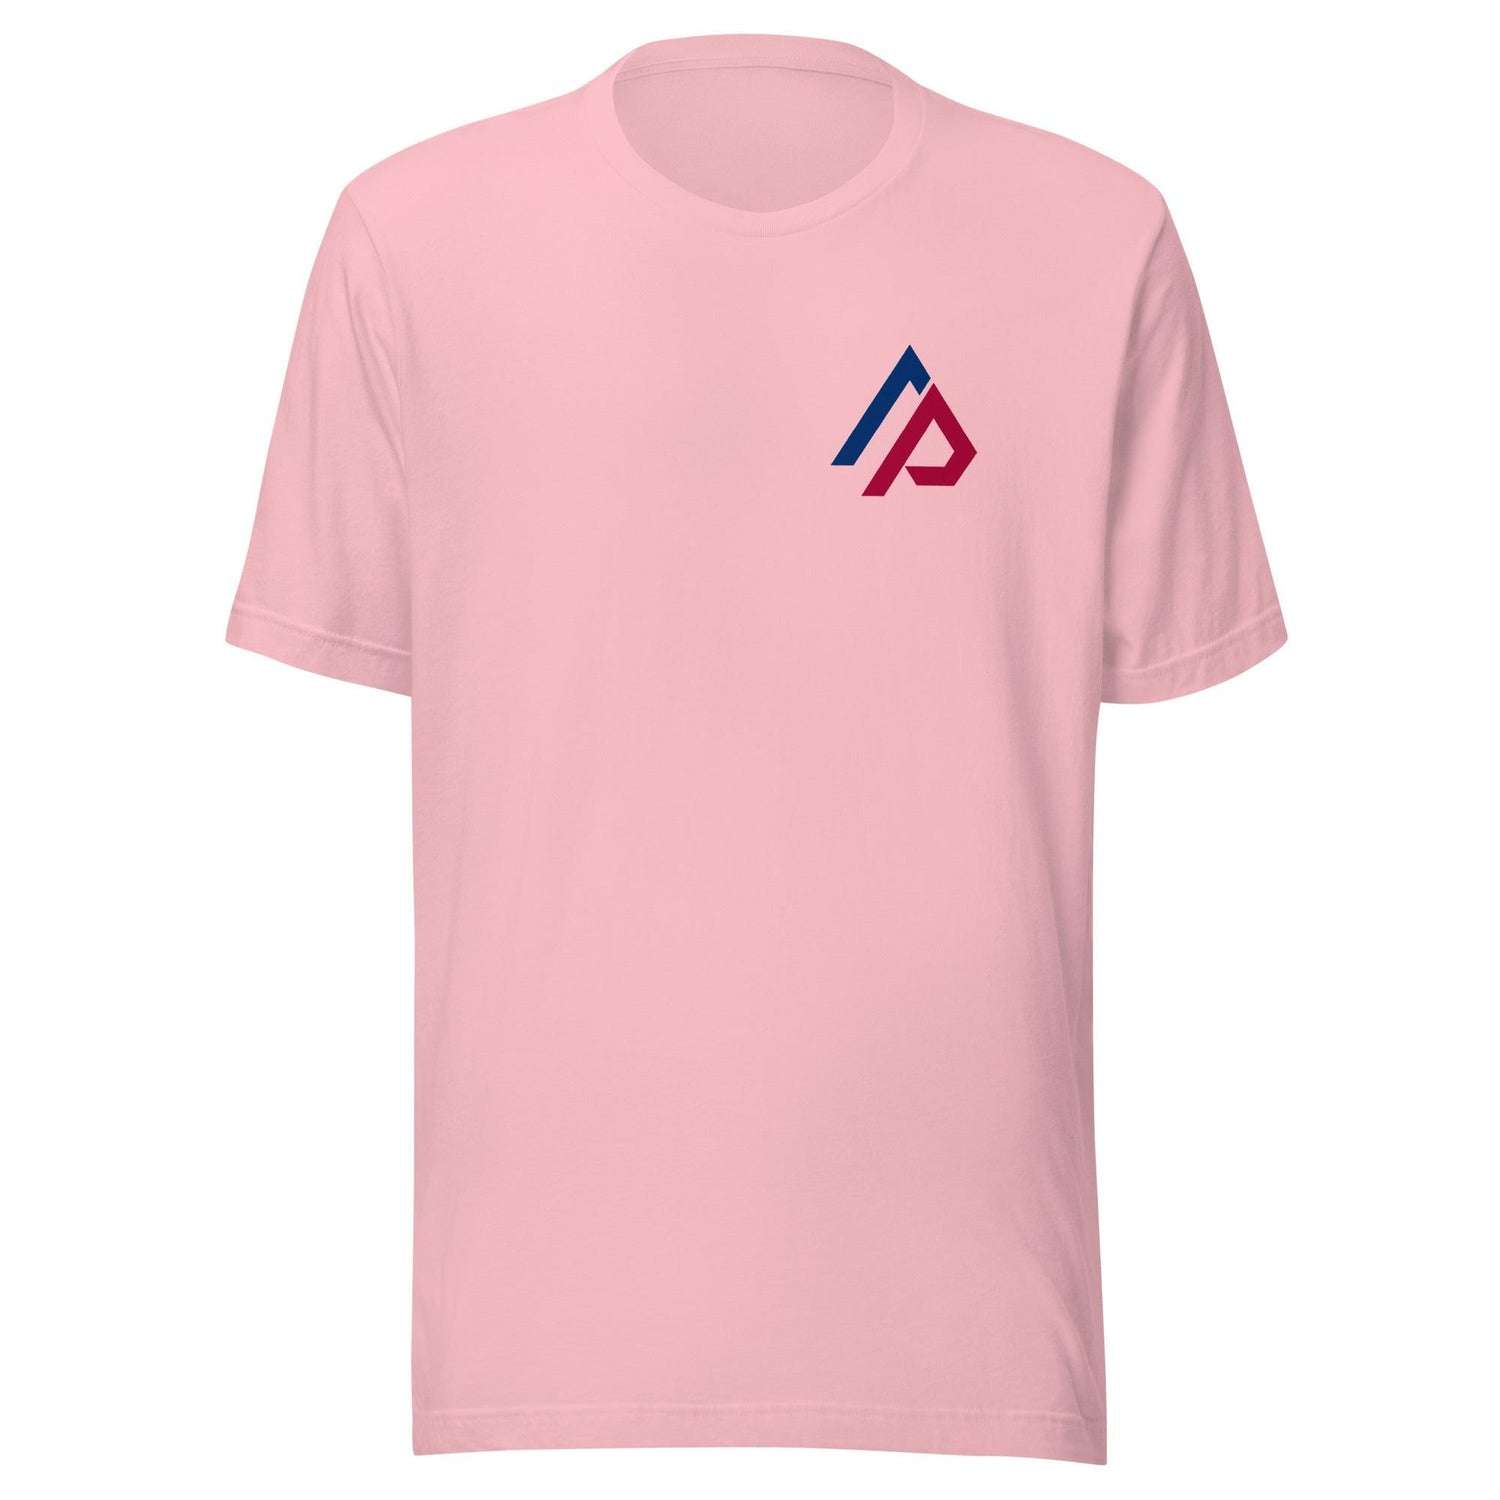 Anderson Paulino "Essential" t-shirt - Fan Arch